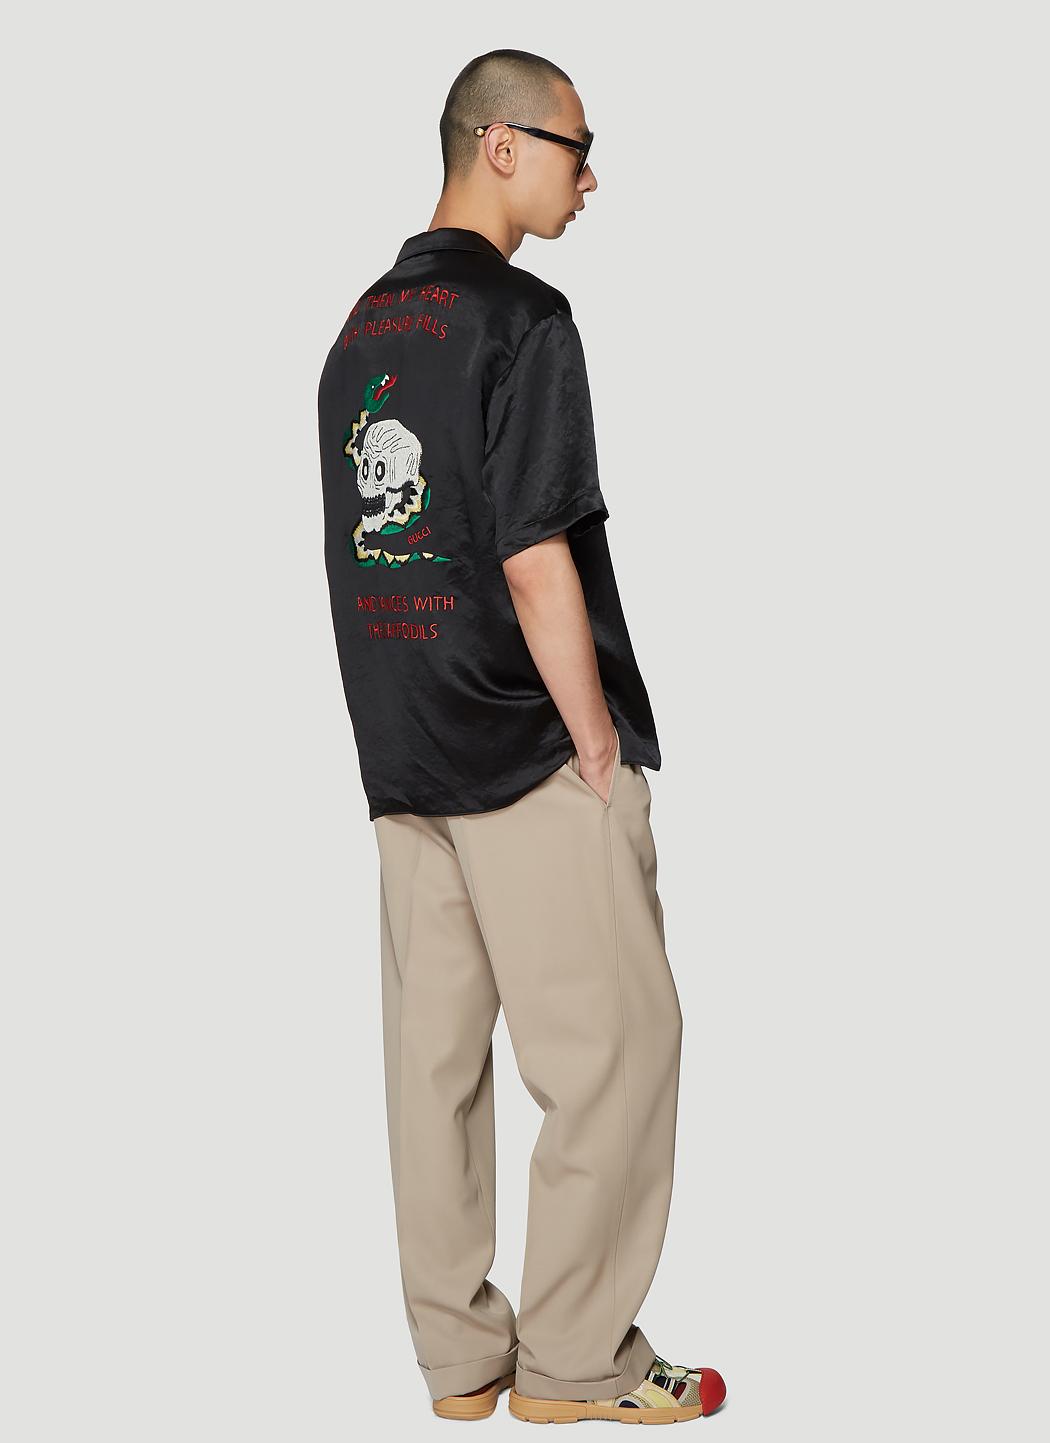 Gucci Camp-collar Embellished Satin Shirt in Black for Men | Lyst